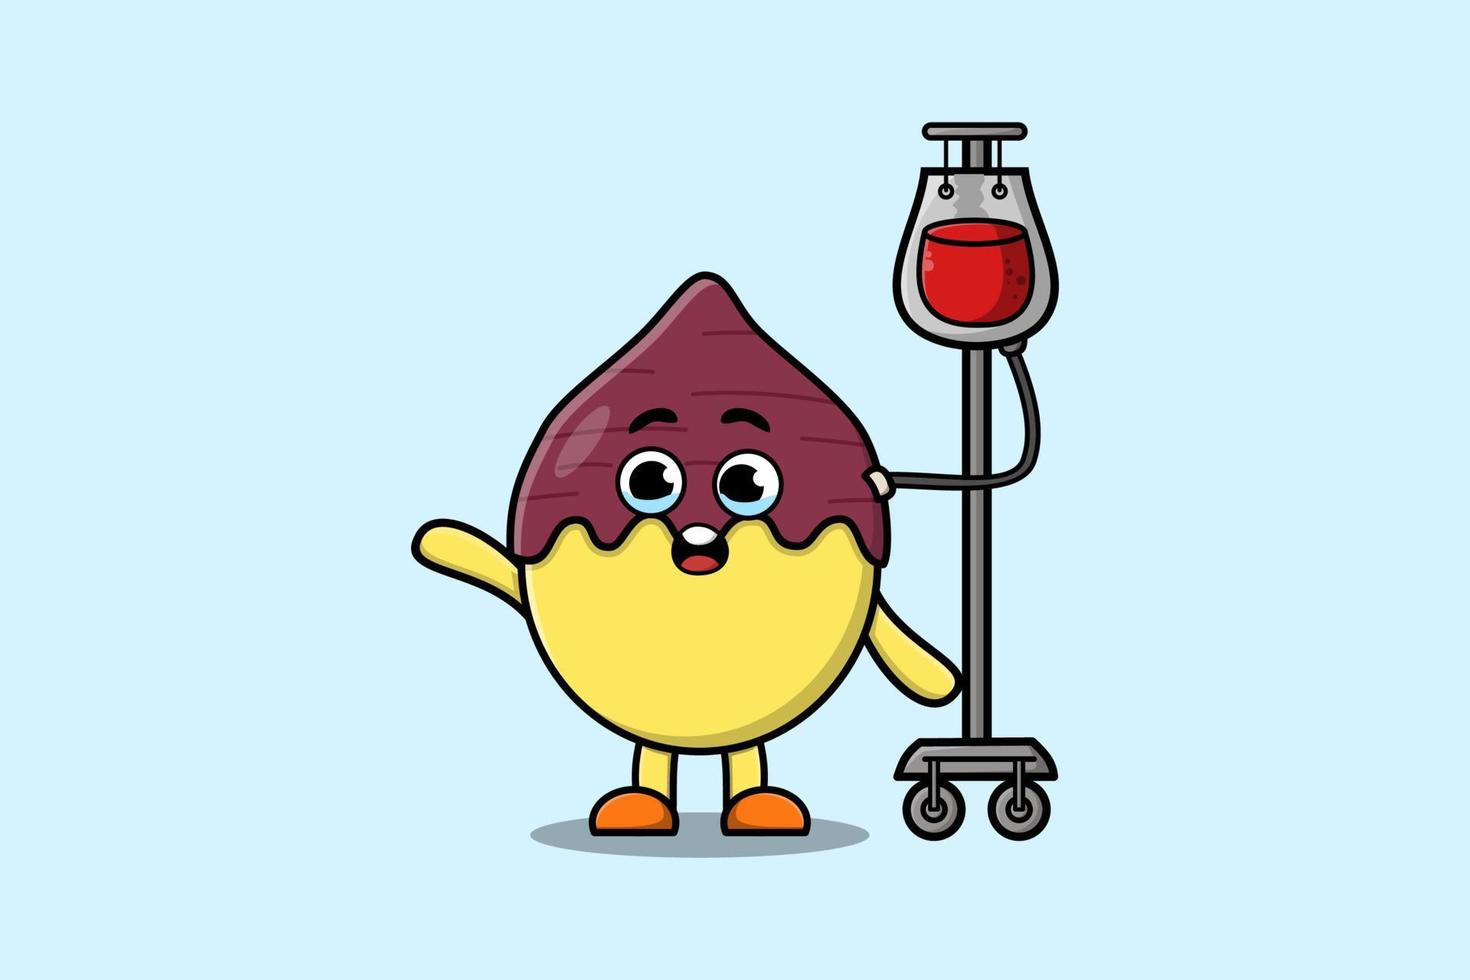 süße Cartoon-Süßkartoffel mit Bluttransfusion vektor